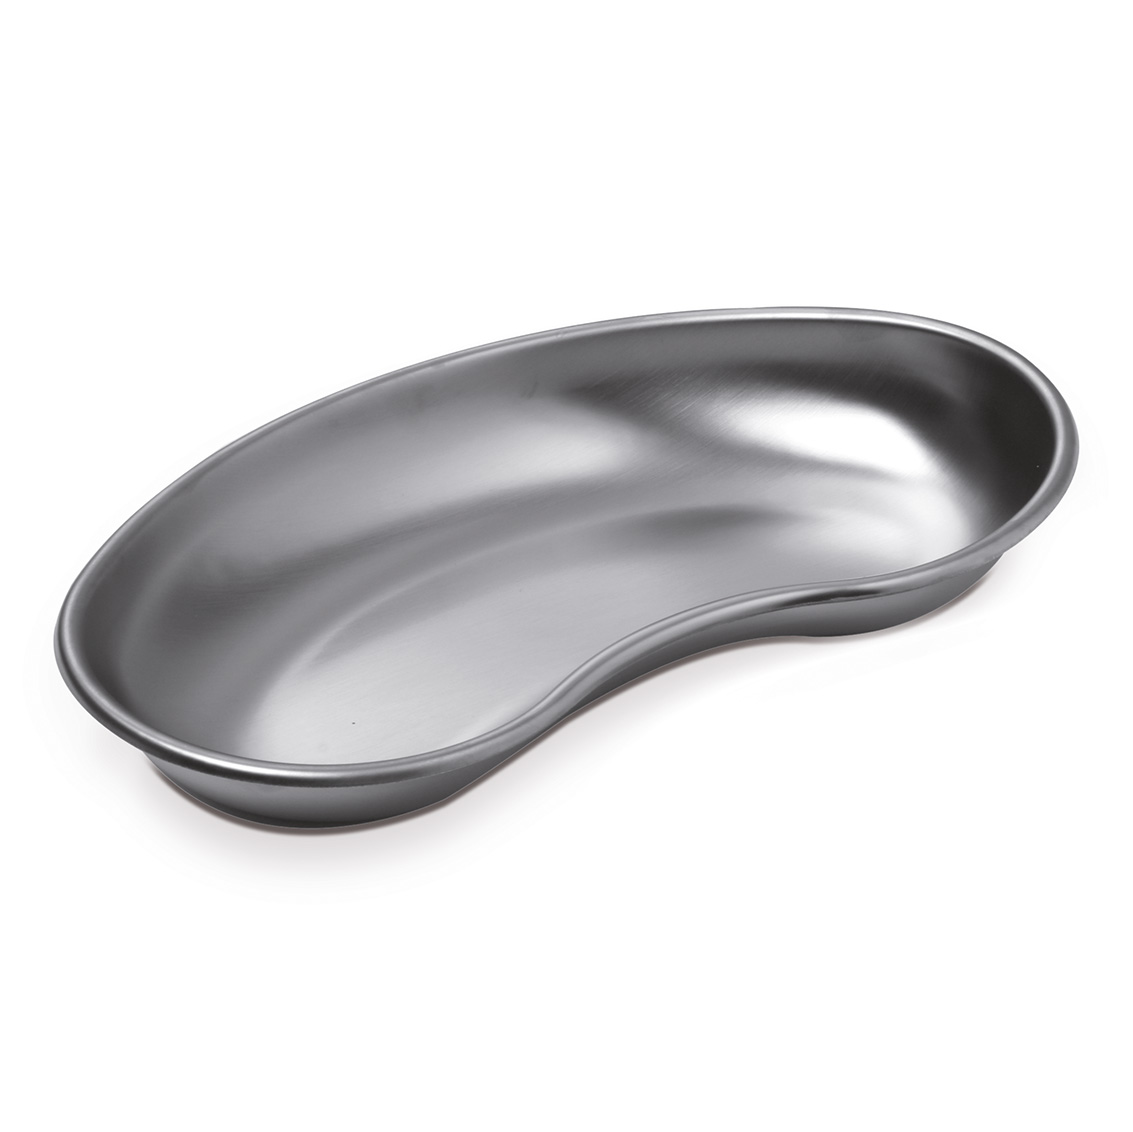 Stainless steel kidney-shaped basin Medium size